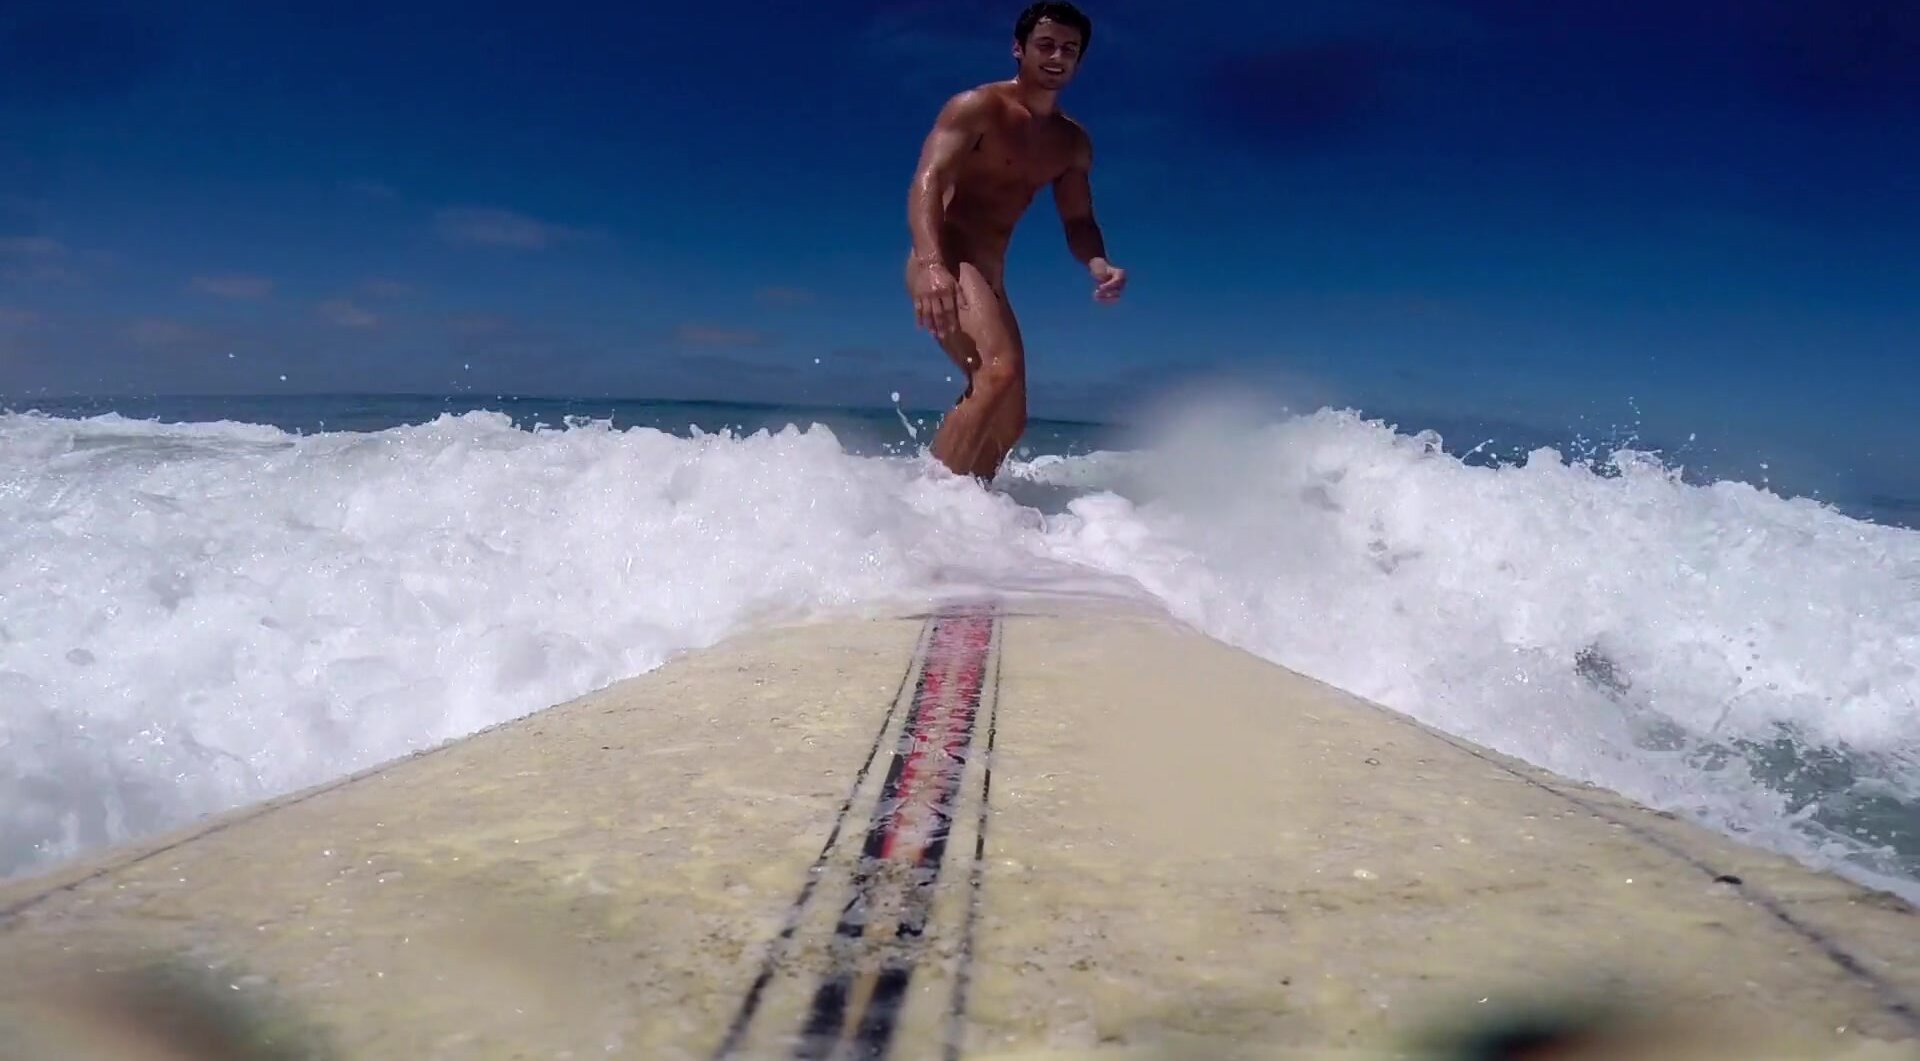 Nude surfing